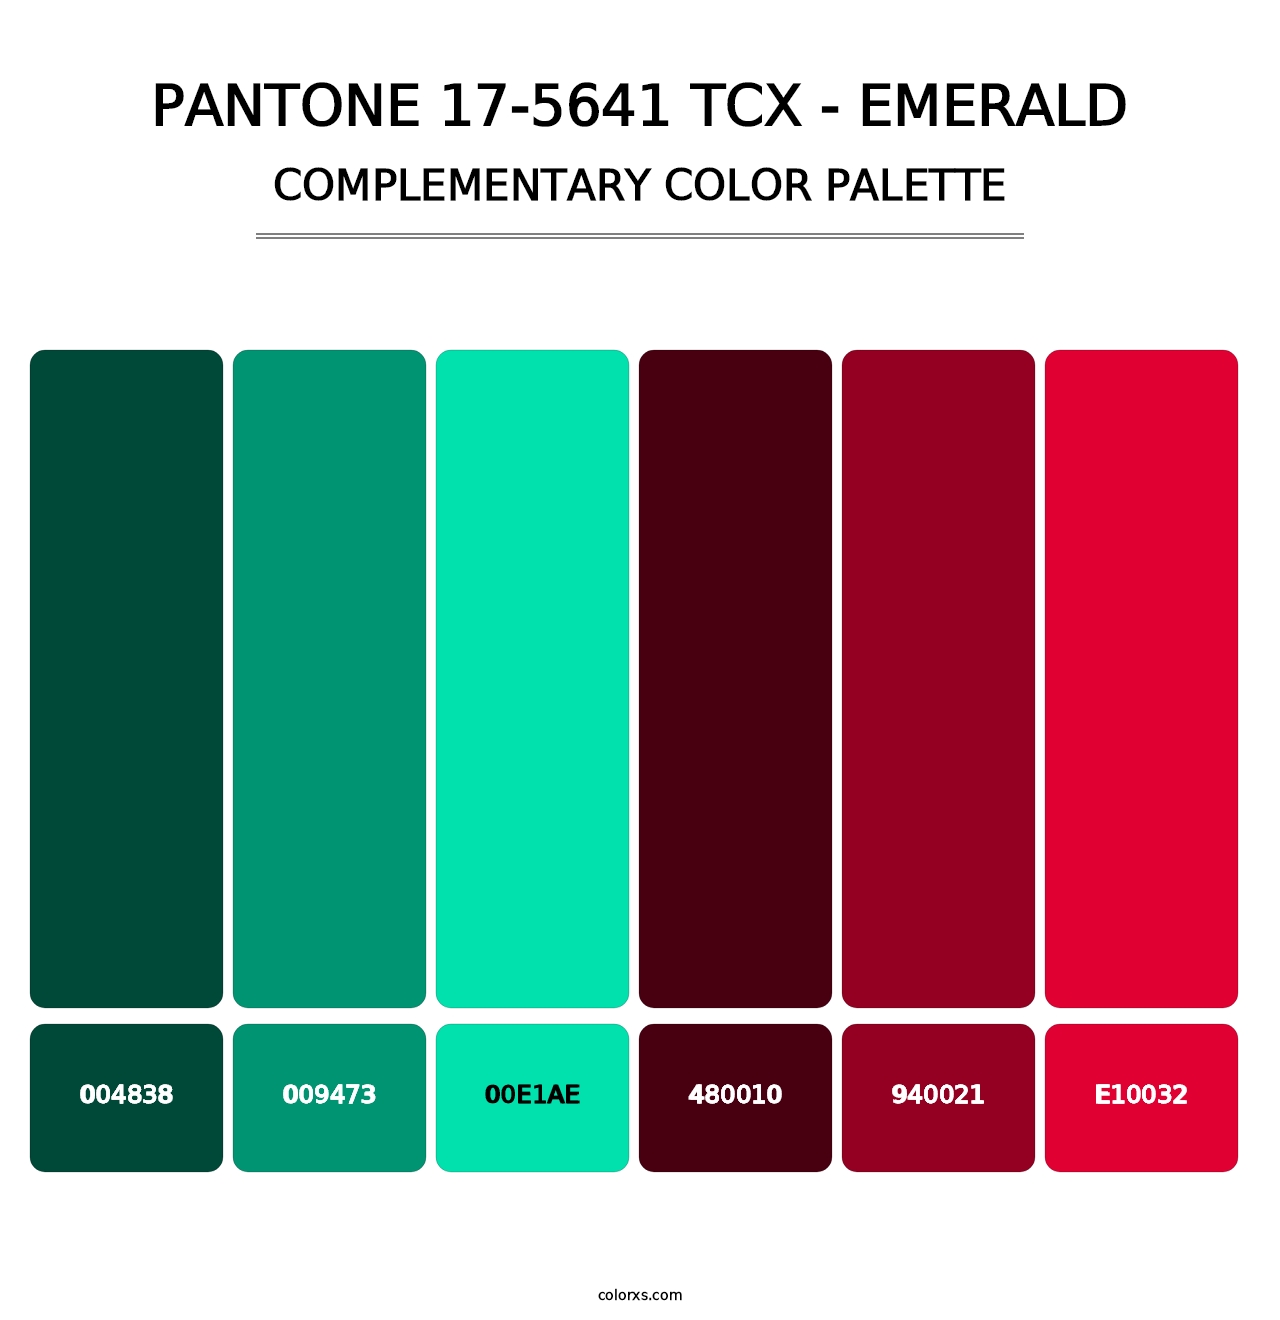 PANTONE 17-5641 TCX - Emerald - Complementary Color Palette